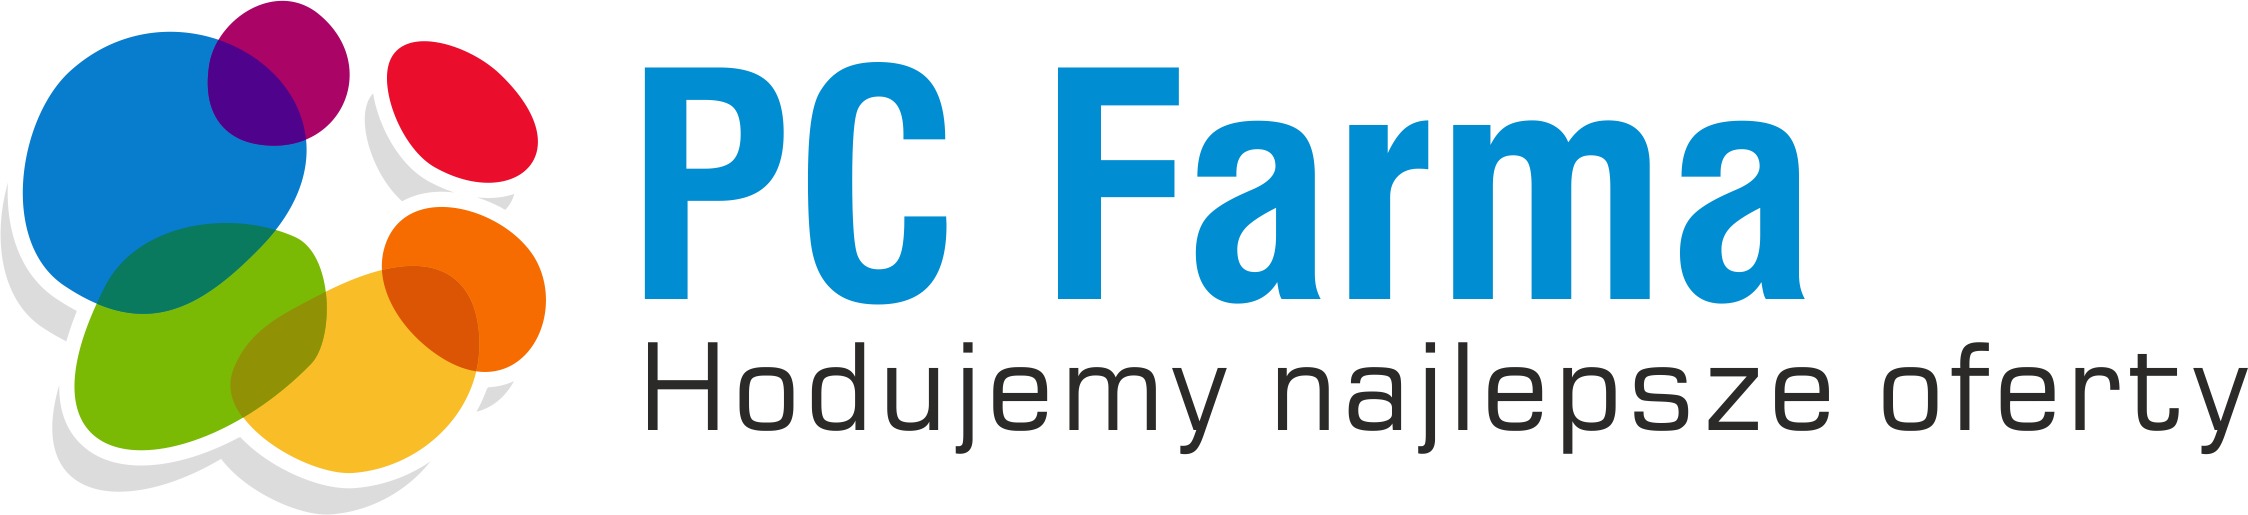 PCFarma logo